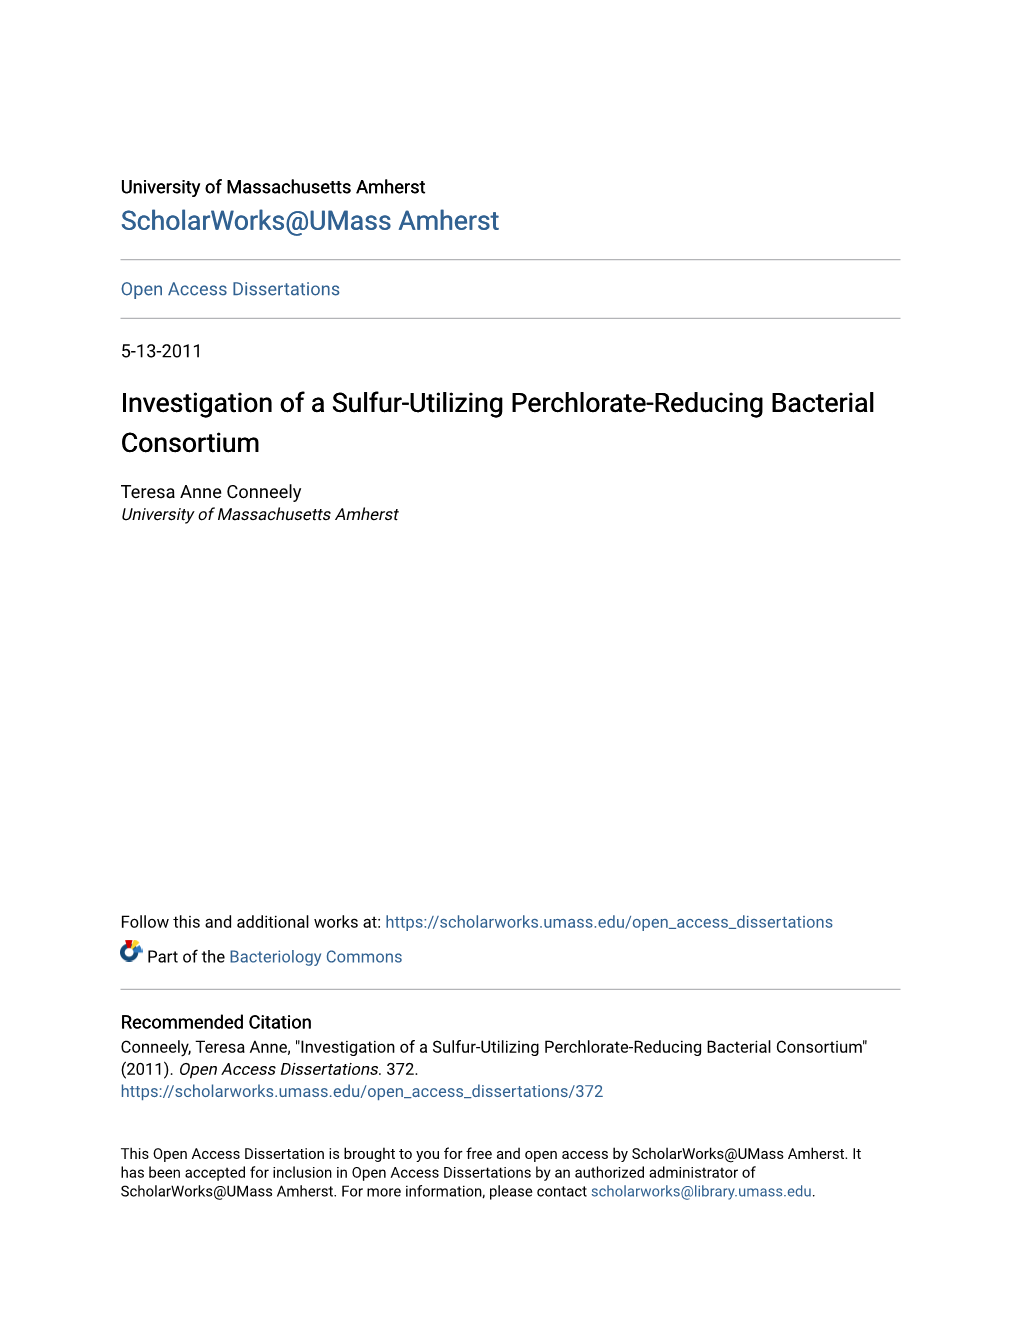 Investigation of a Sulfur-Utilizing Perchlorate-Reducing Bacterial Consortium